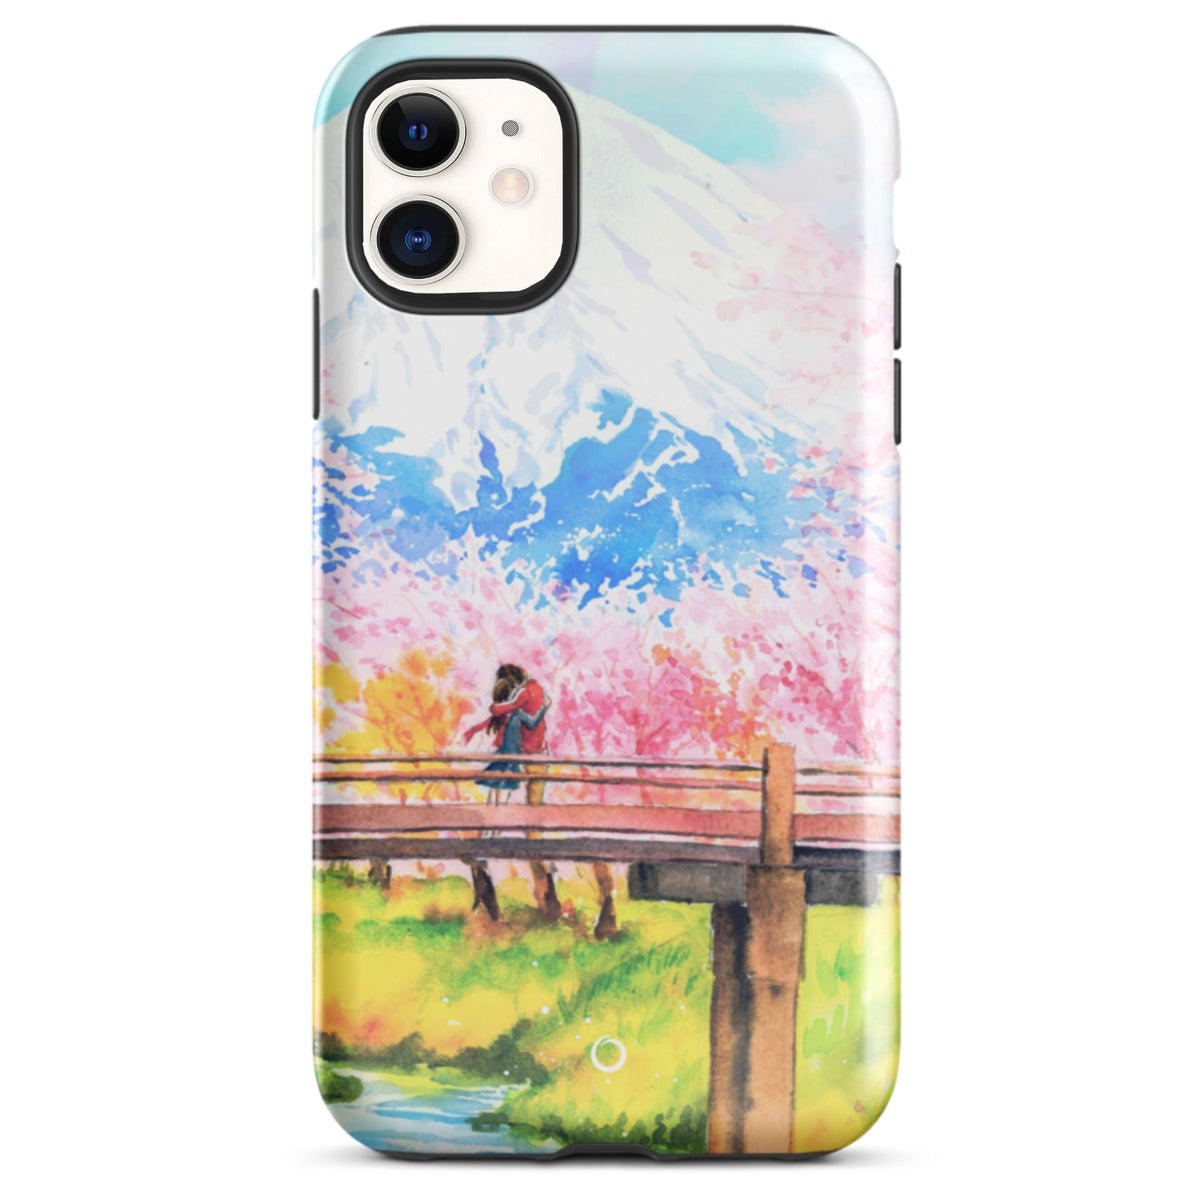 Sakura Dreamscape iPhone Case - iPhone 11